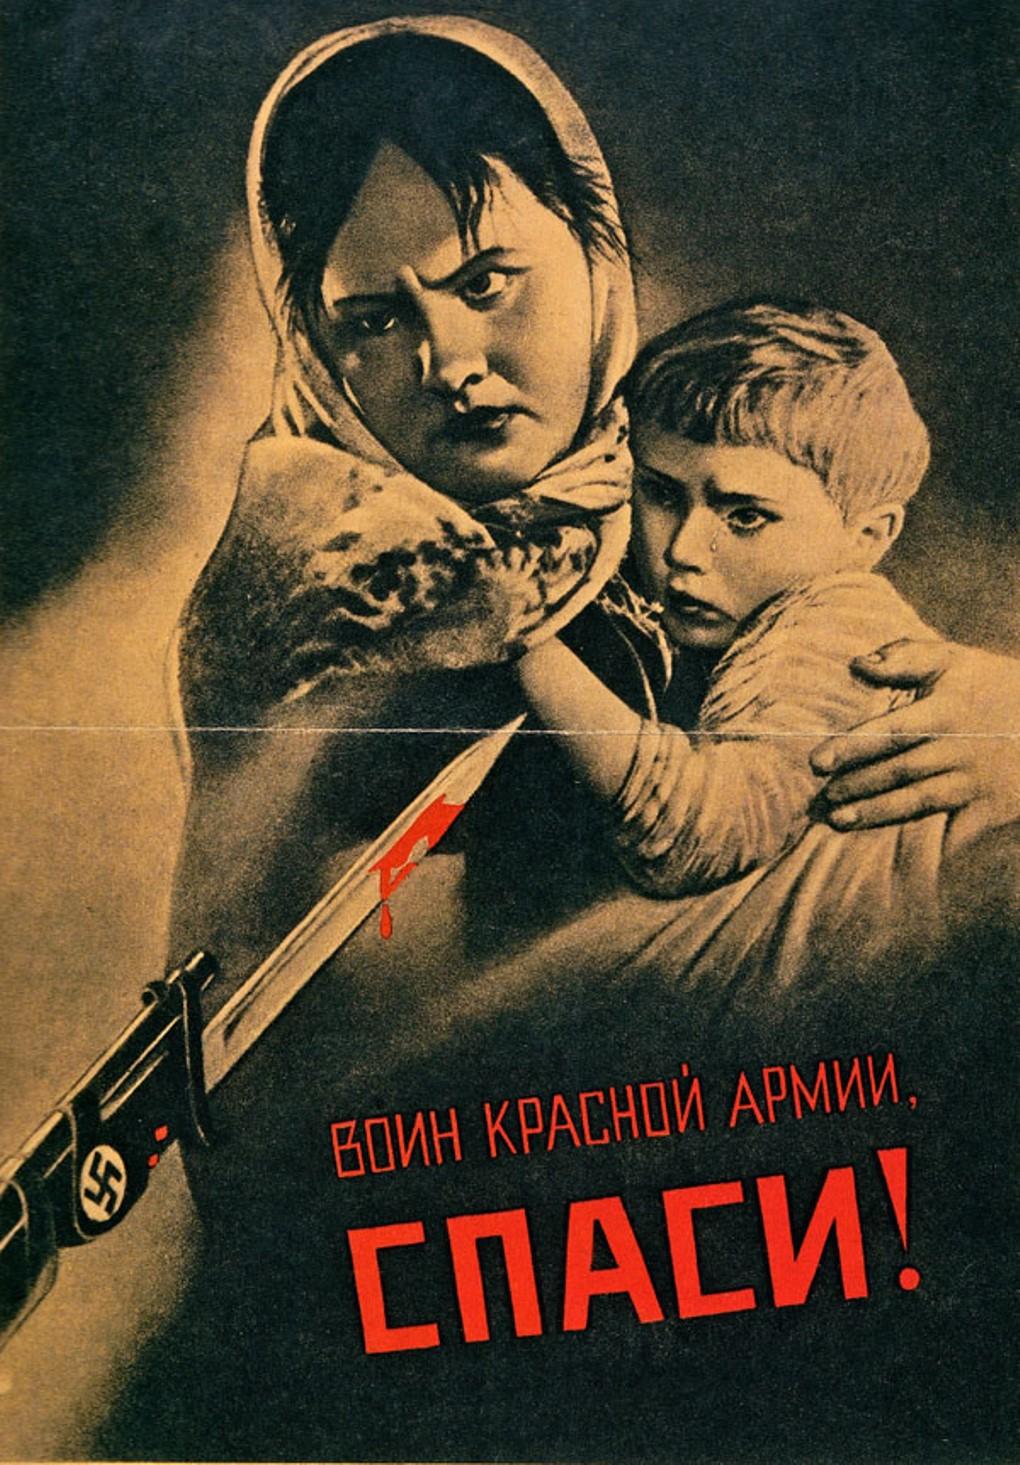 Воин Красной Армии, спаси! Виктор Корецкий, 1943